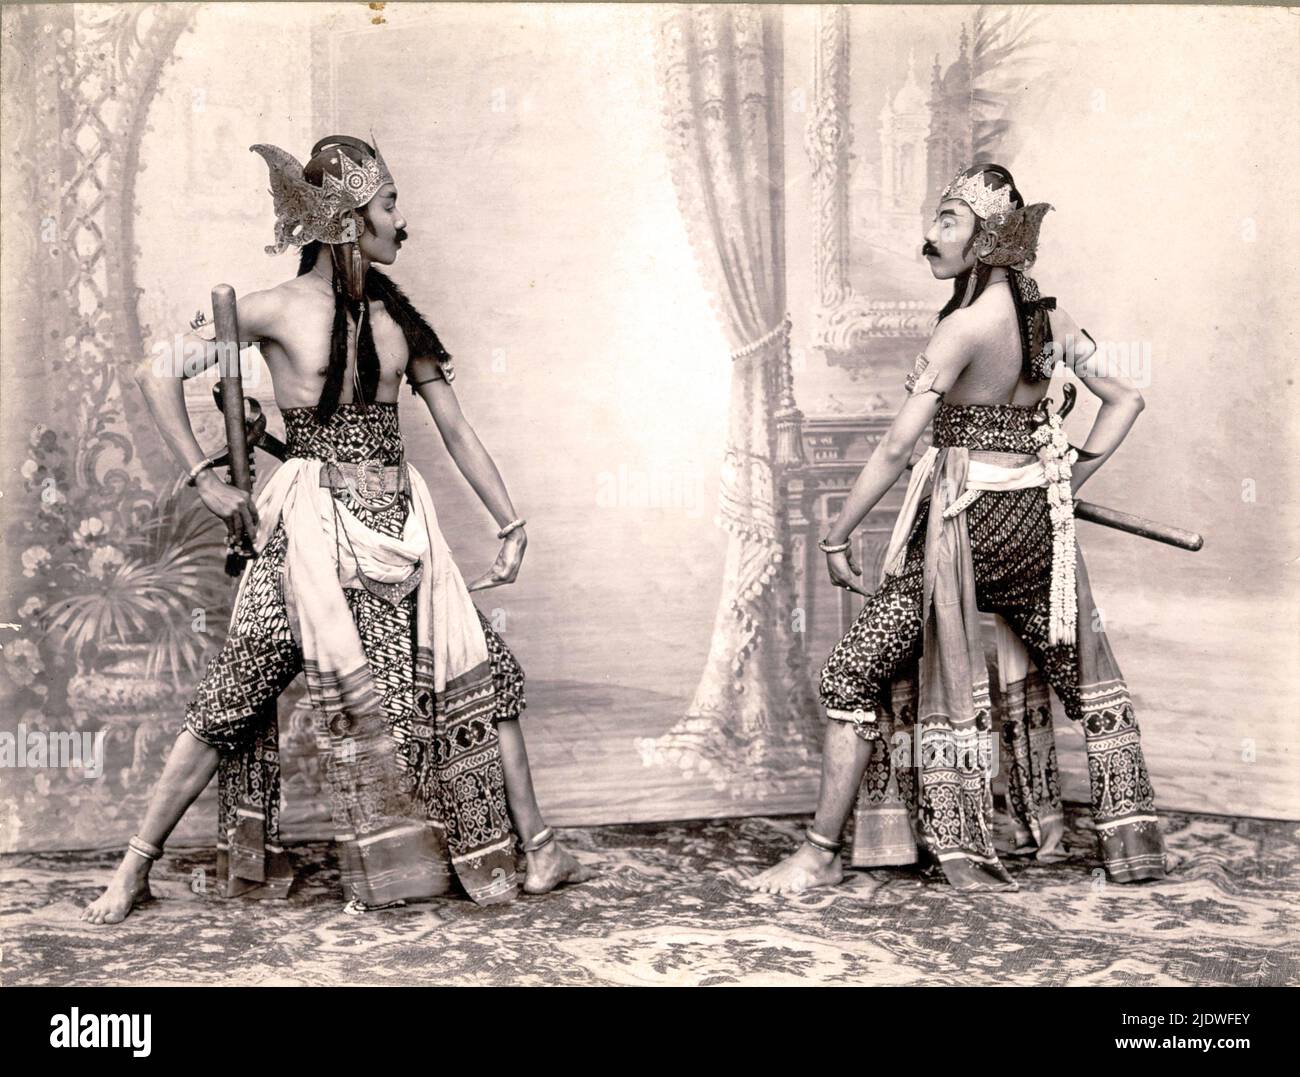 Javaanse hofdansers (Soera Karta), L. King Ming, c. 1860 - c. 1915 Stockfoto